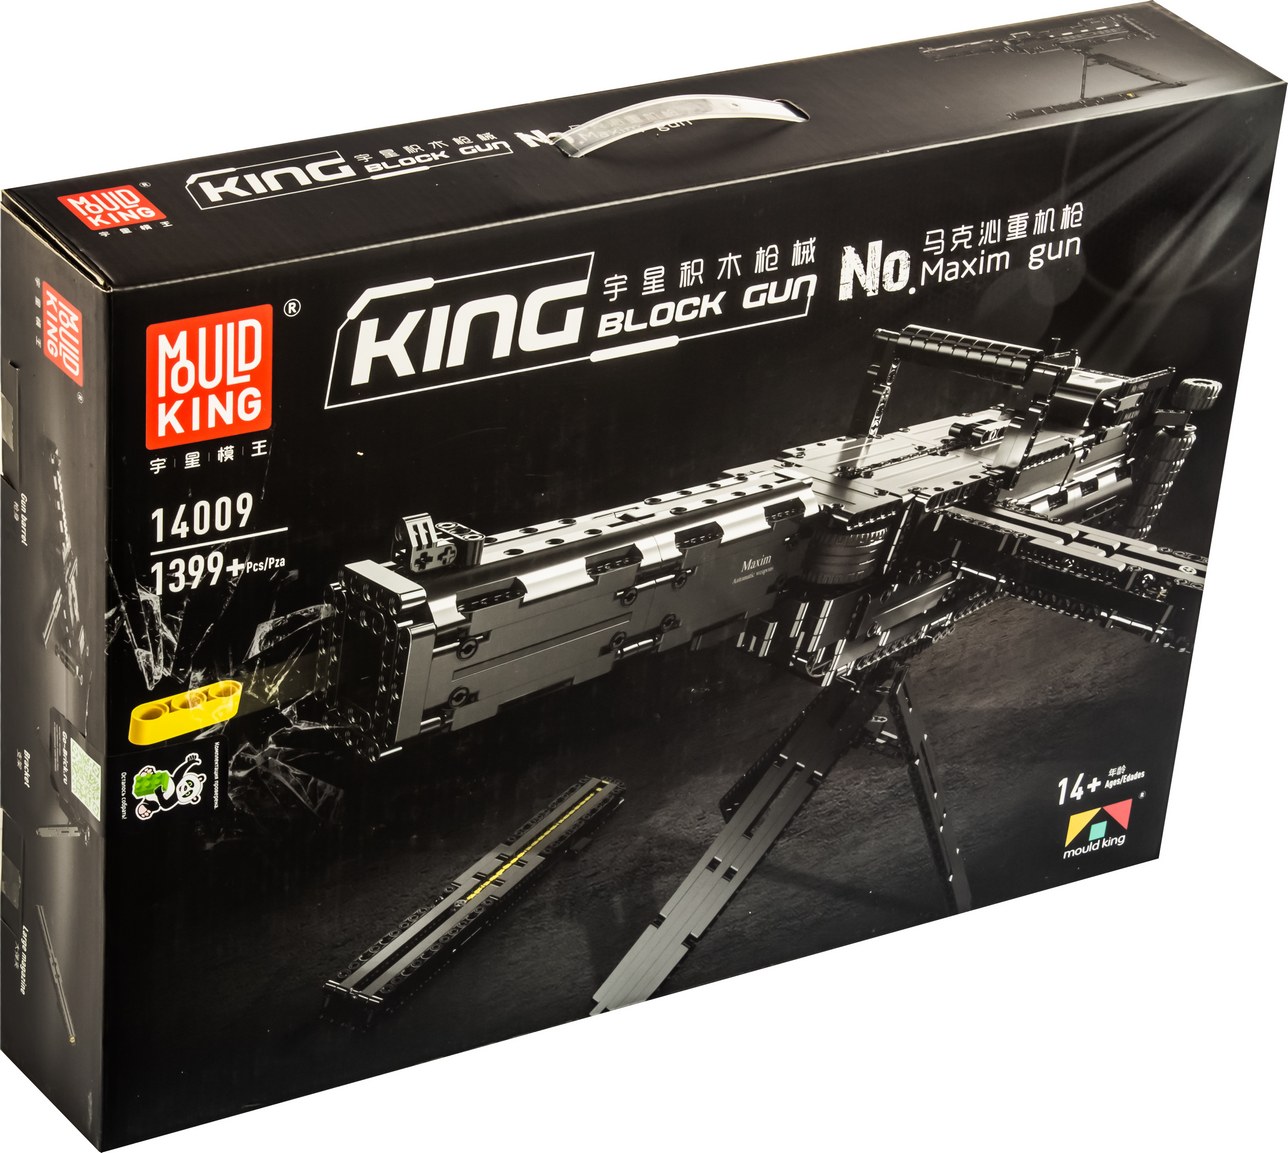 Конструктор-игрушка MOULD KING 14009 Пулемет Максима, 14+, 1 399 дет.